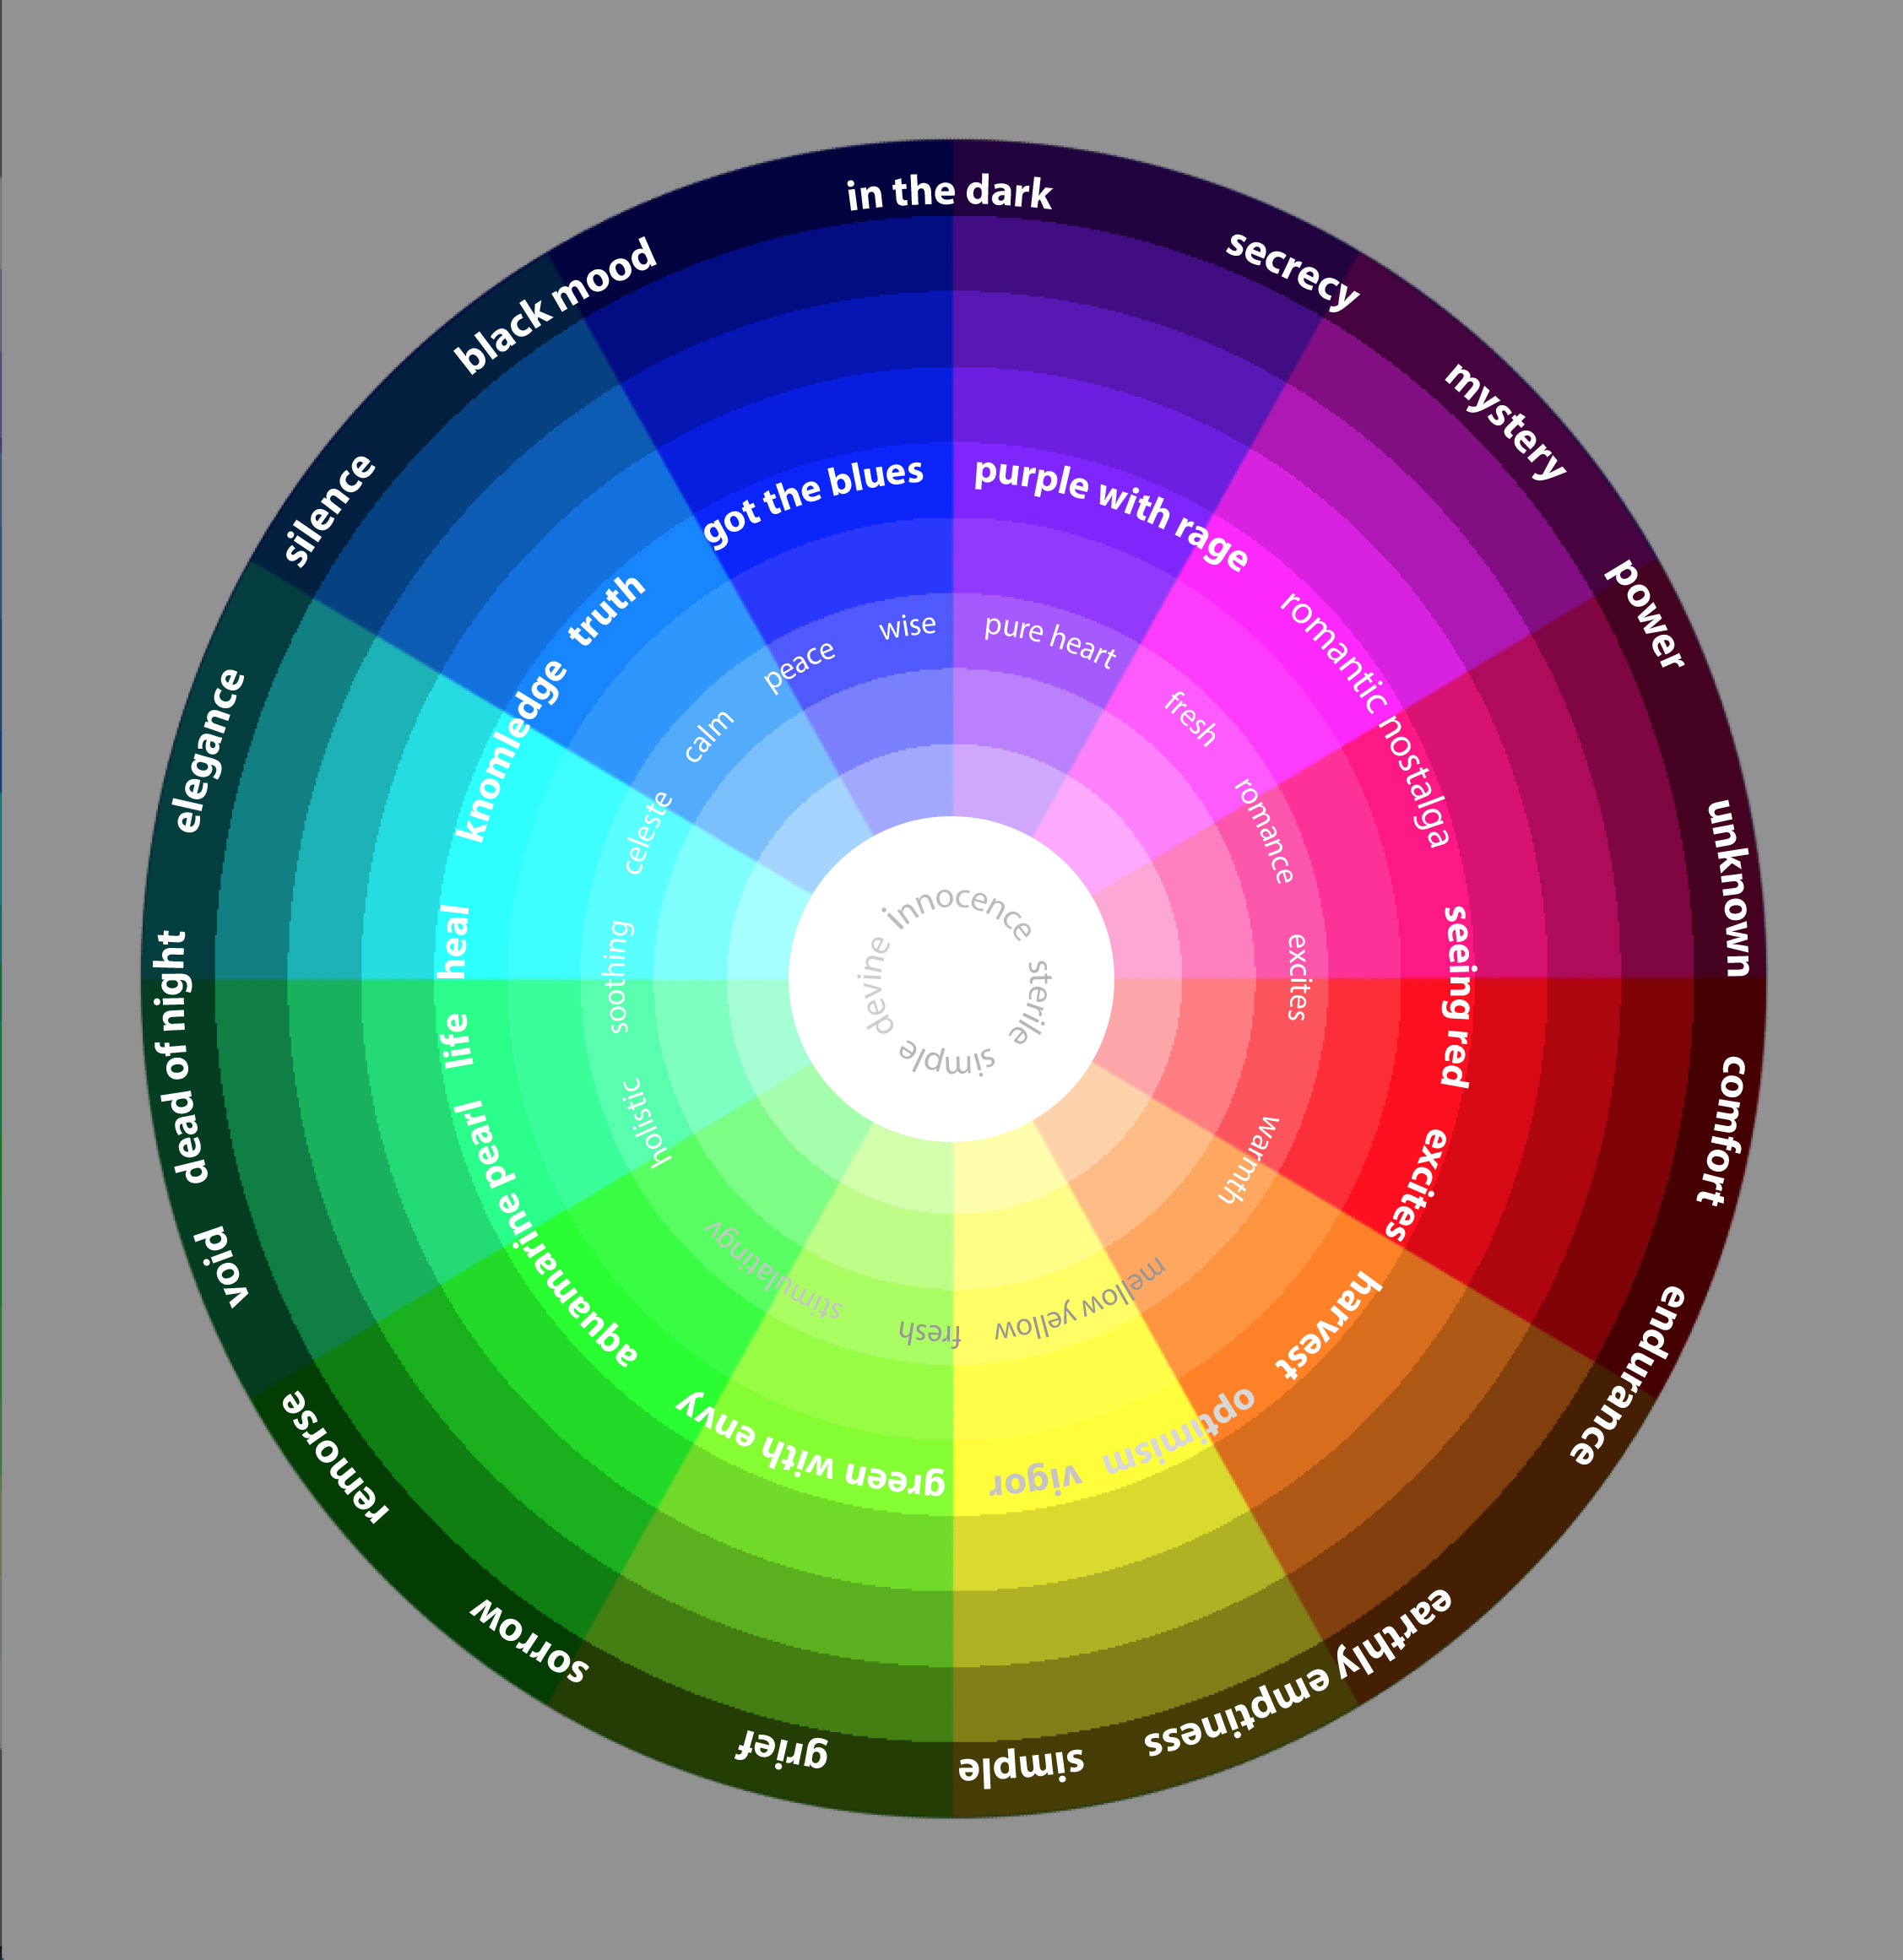 Cmyk Color Wheel Chart